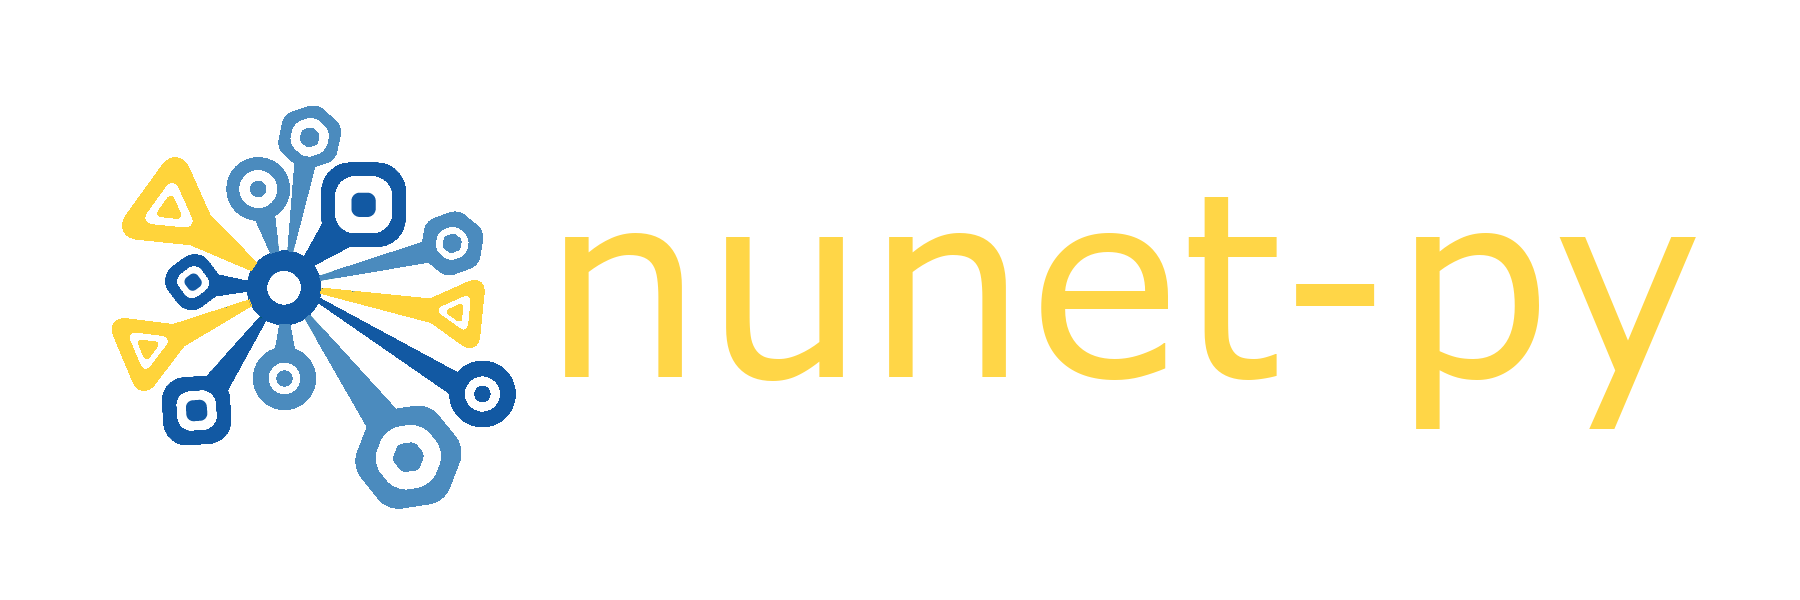 nunet-py